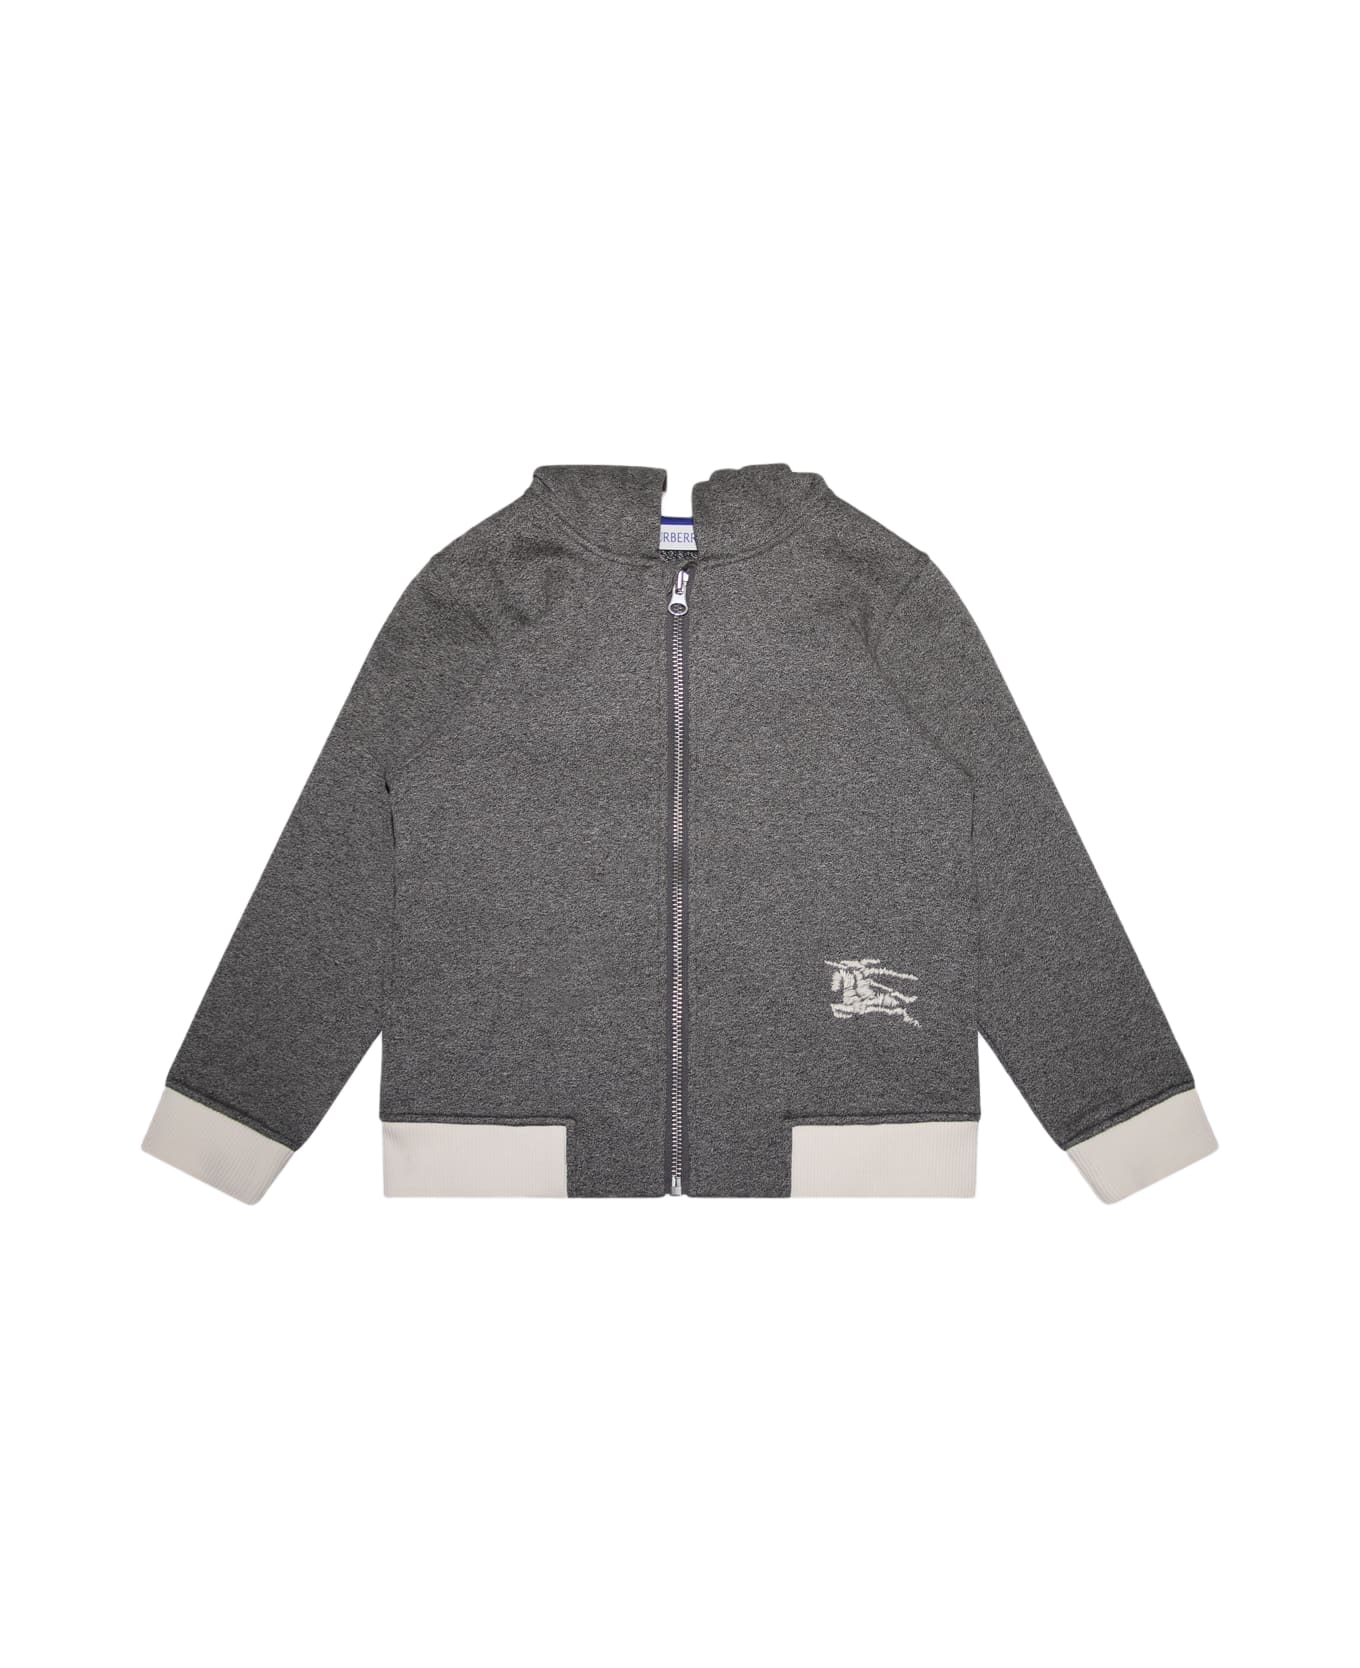 Burberry Grey And Camera Cotton Sweatshirt - CHARCOAL GREY MELANG